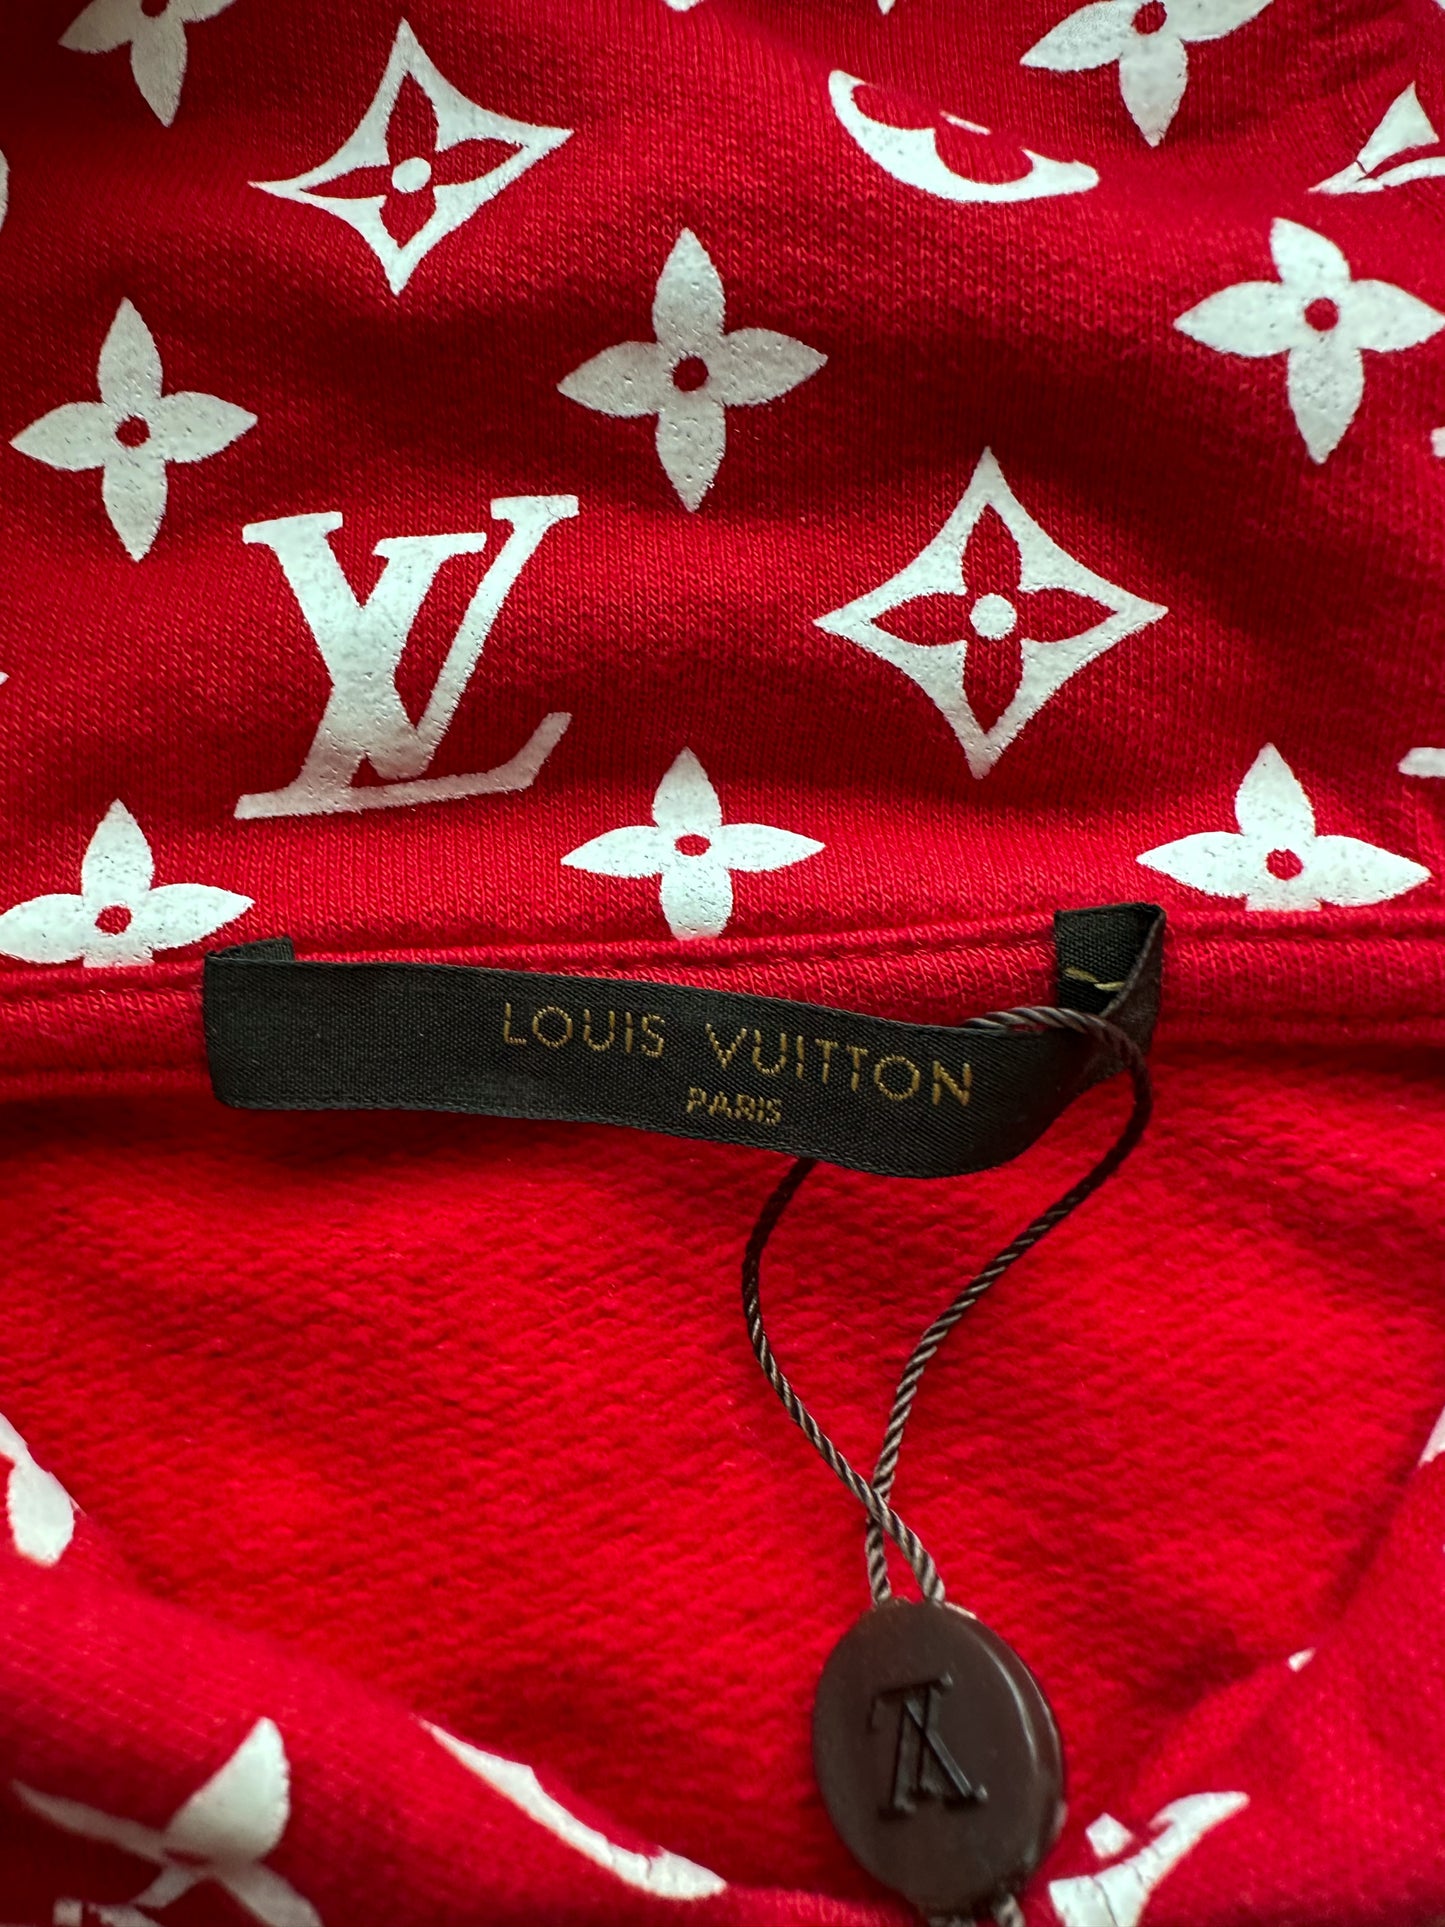 SUPREME LOUIS VUITTON Box Logo Hoodie Red large $335.00 - PicClick